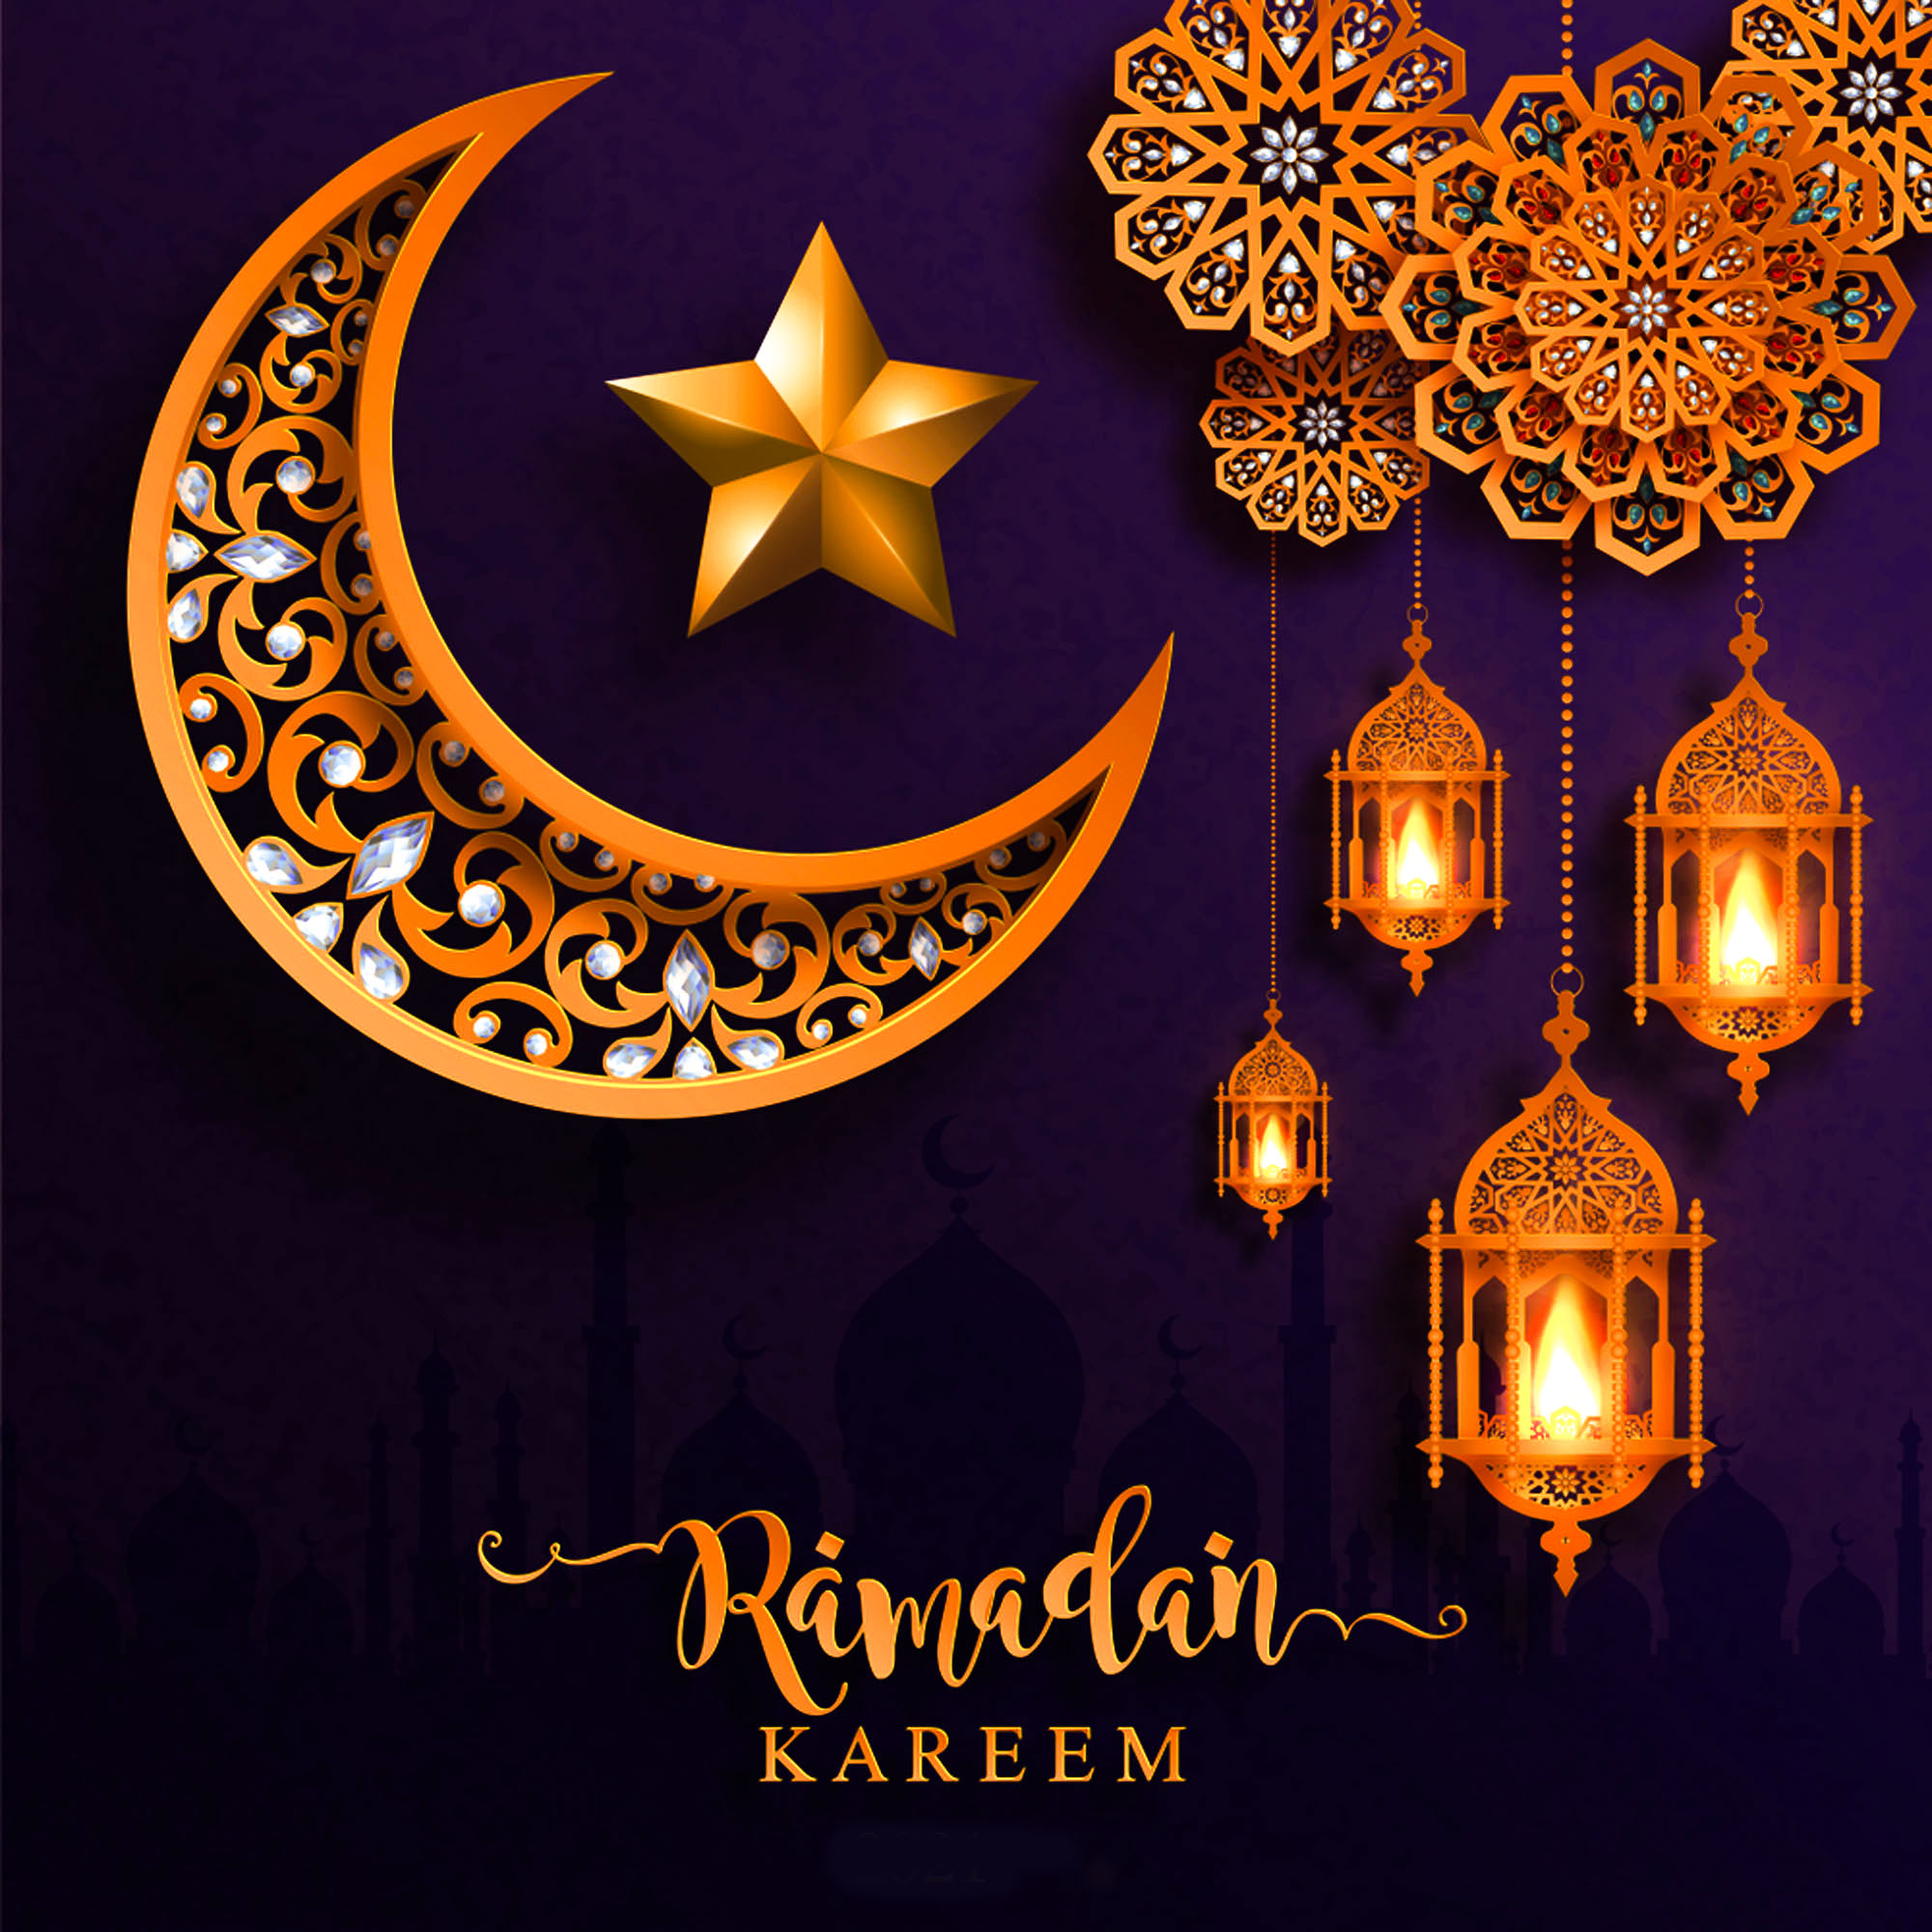 Ramadan kareem 2022 wishes